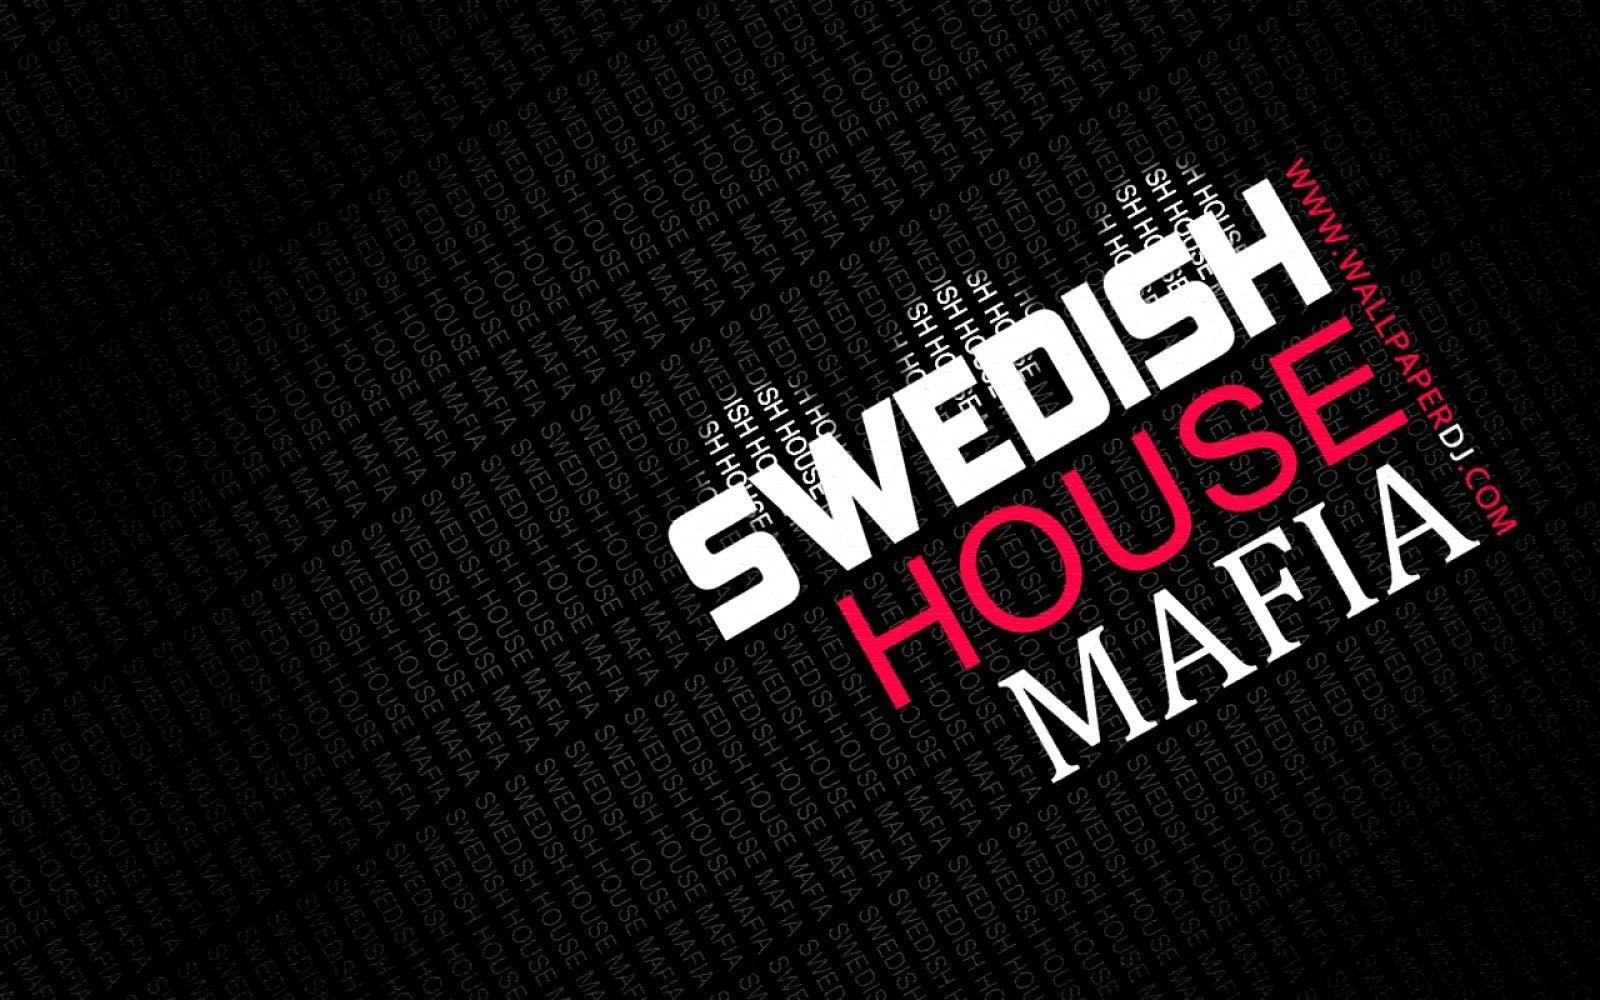 swedish house mafia shirt